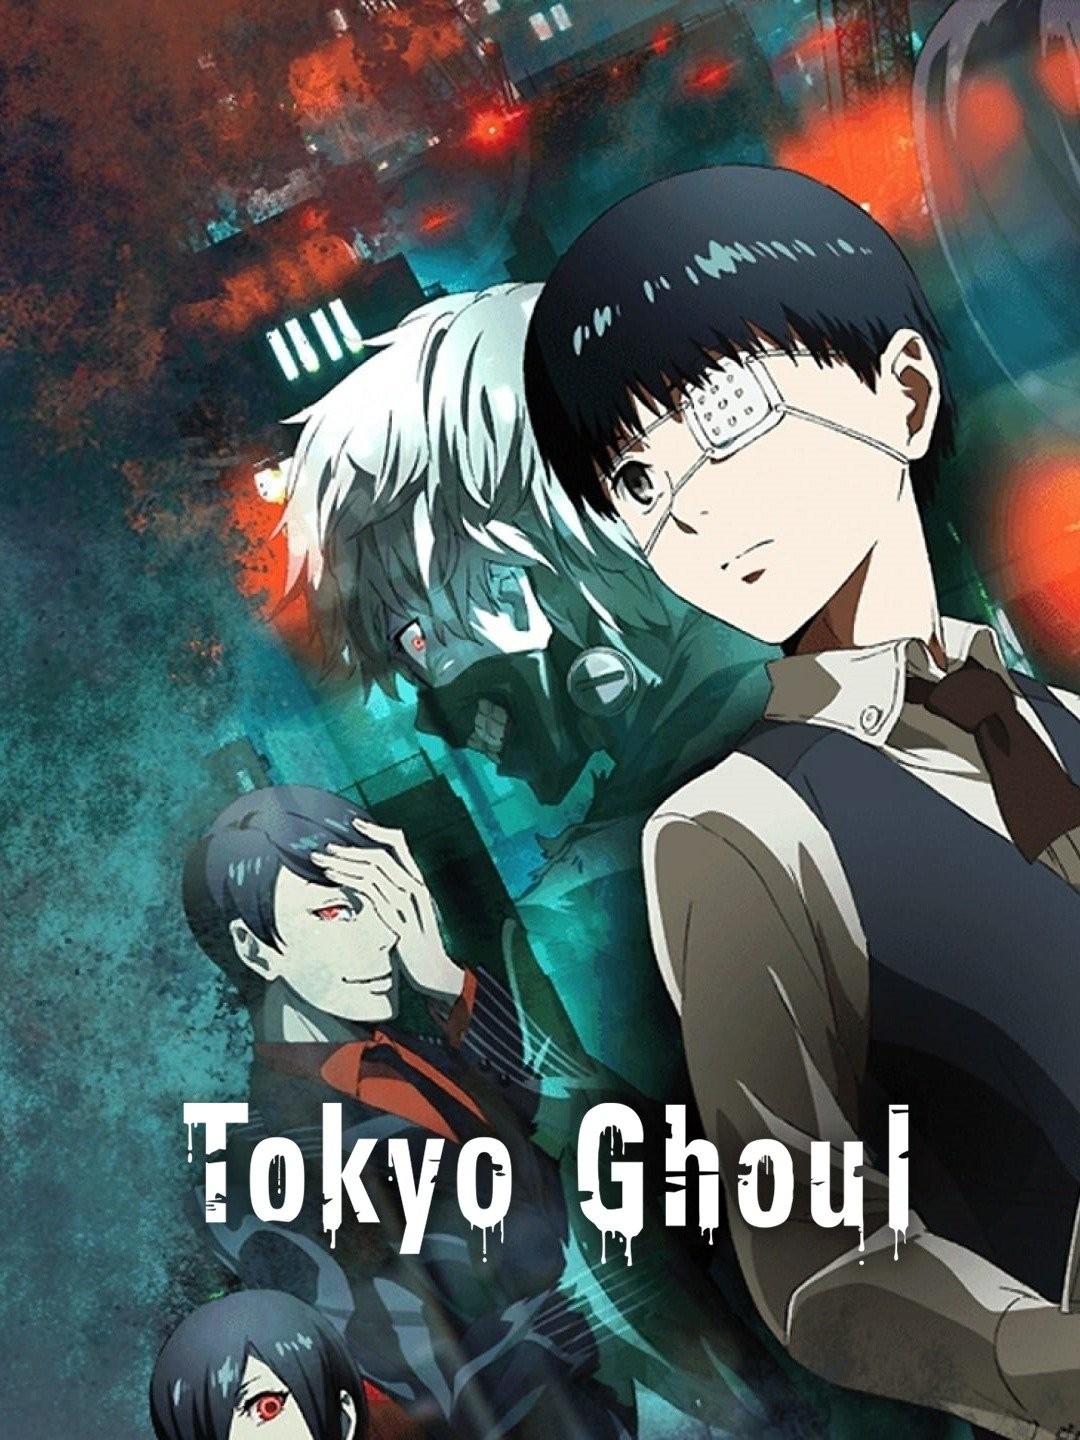 Tokyo Ghoul vA Season 2 - Official Trailer 